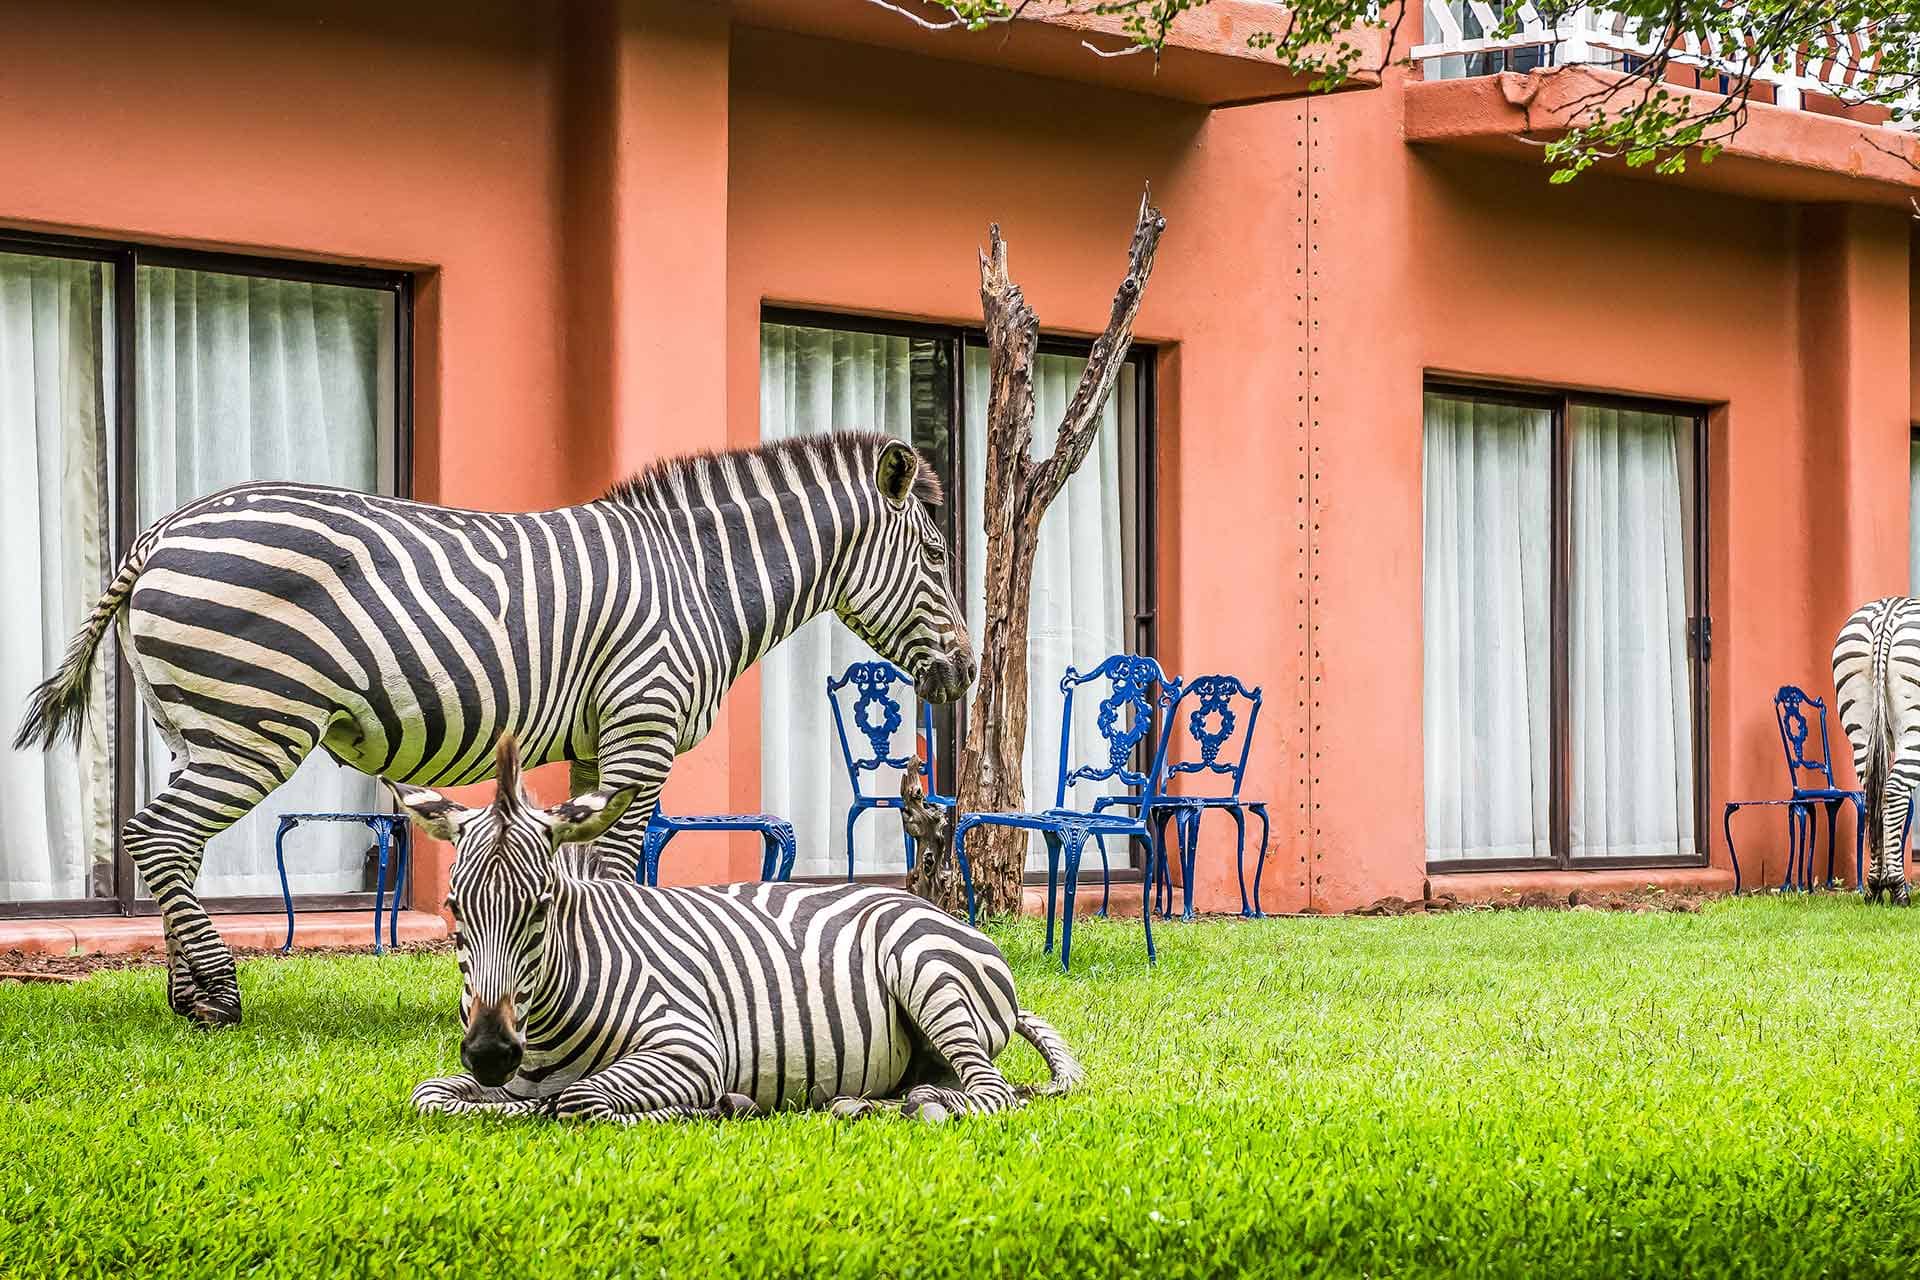 Zebras grazing